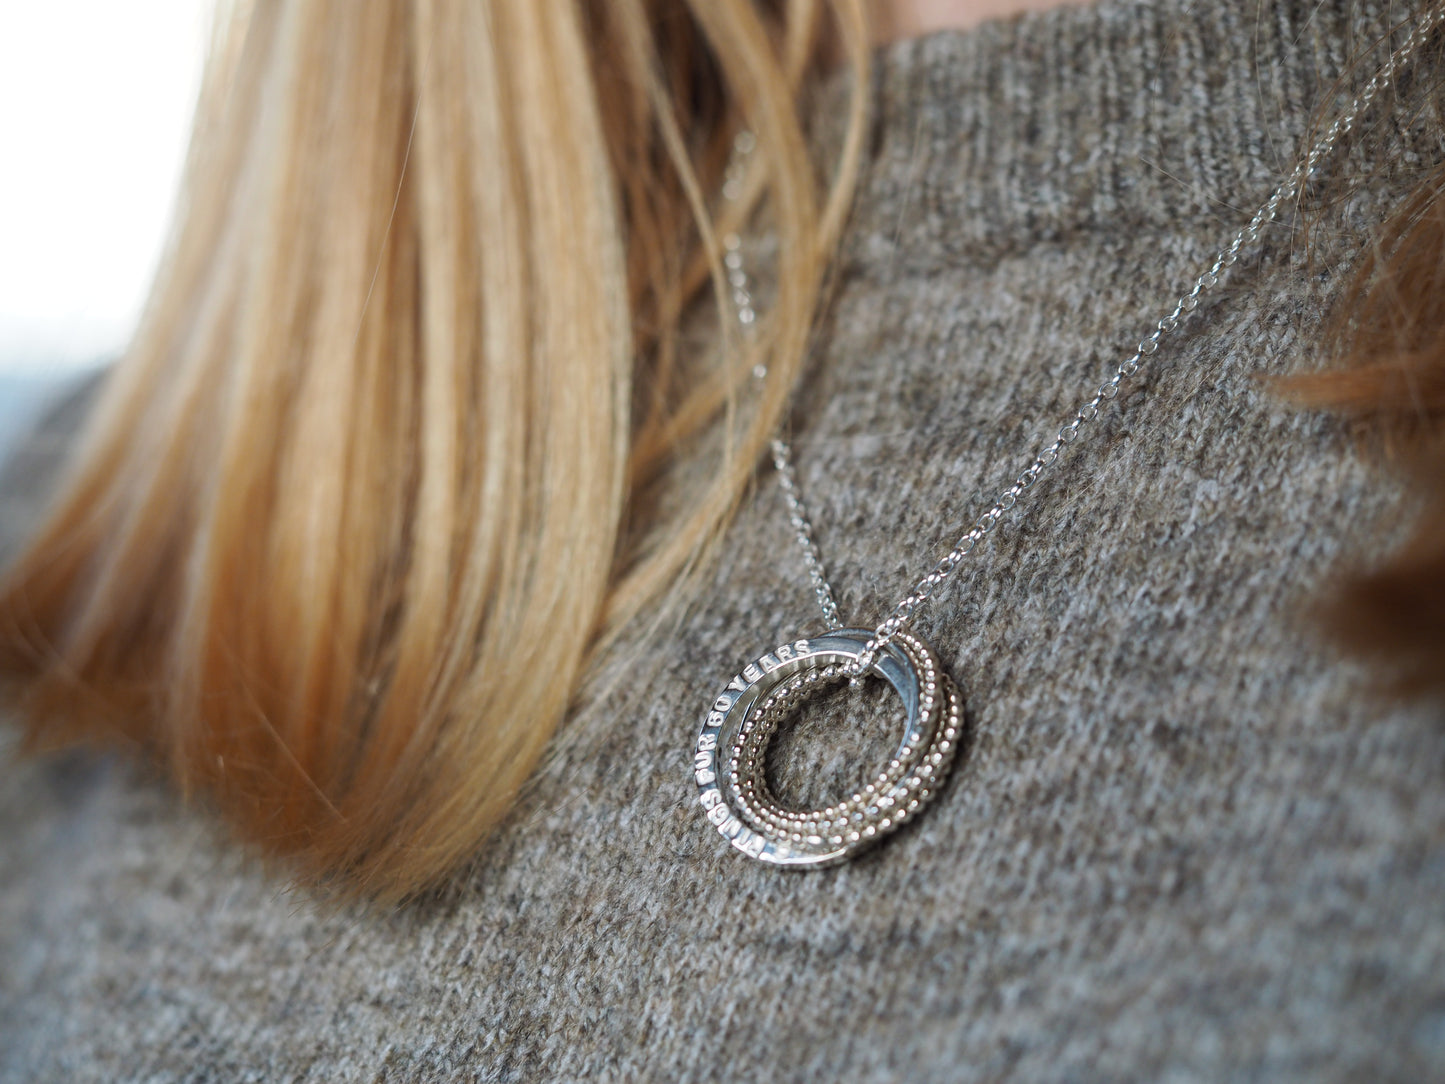 Silver Interlocking ring necklace